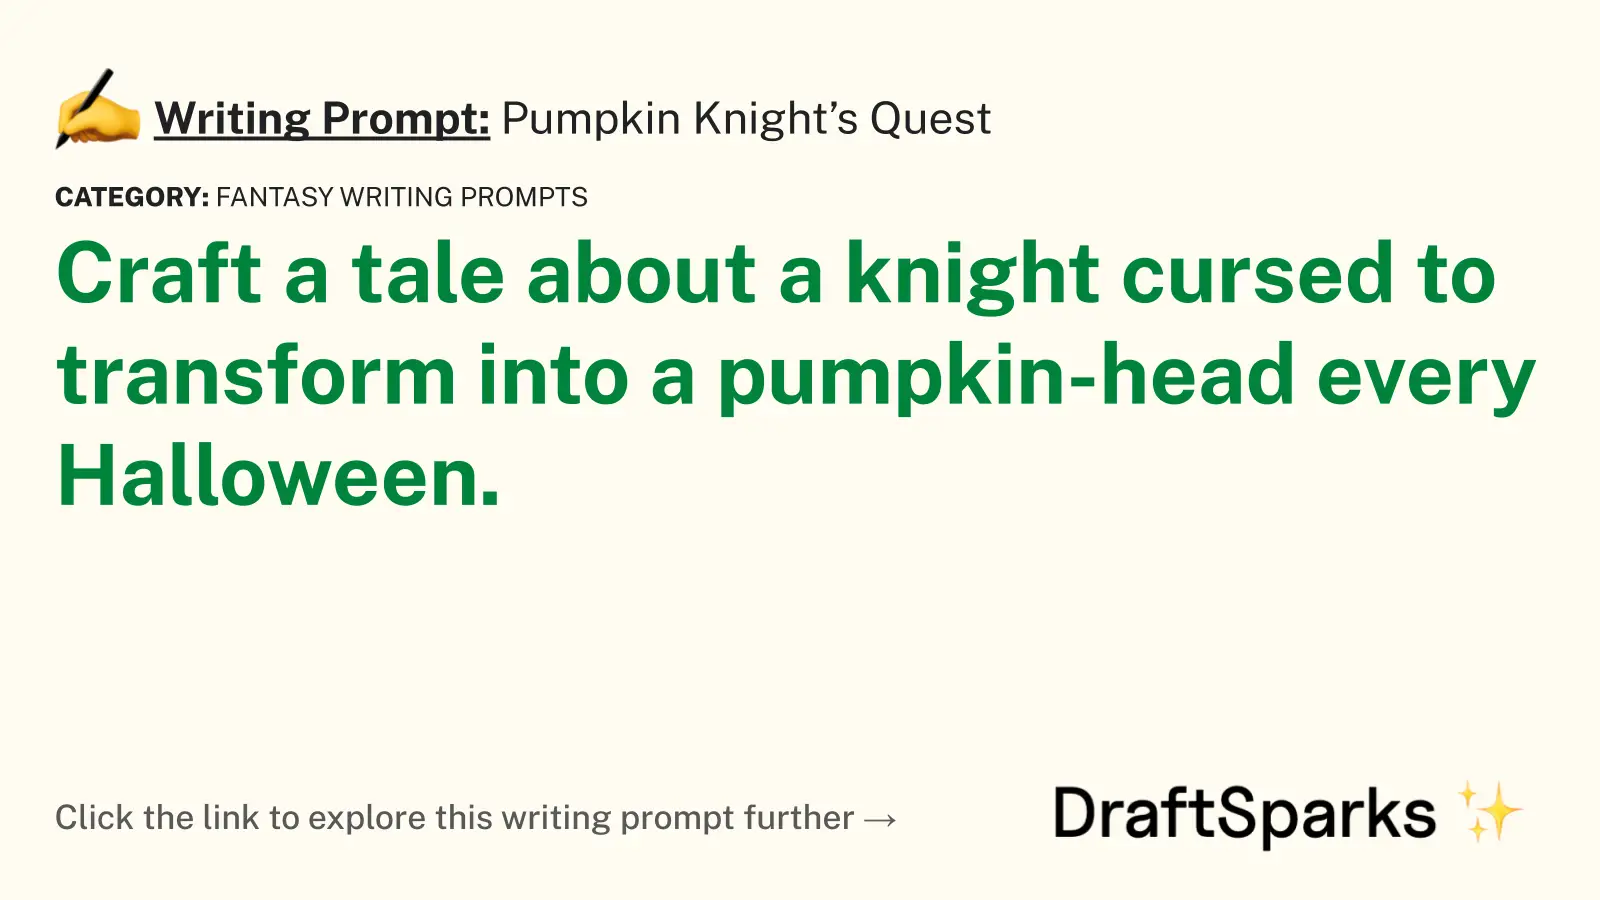 Pumpkin Knight’s Quest